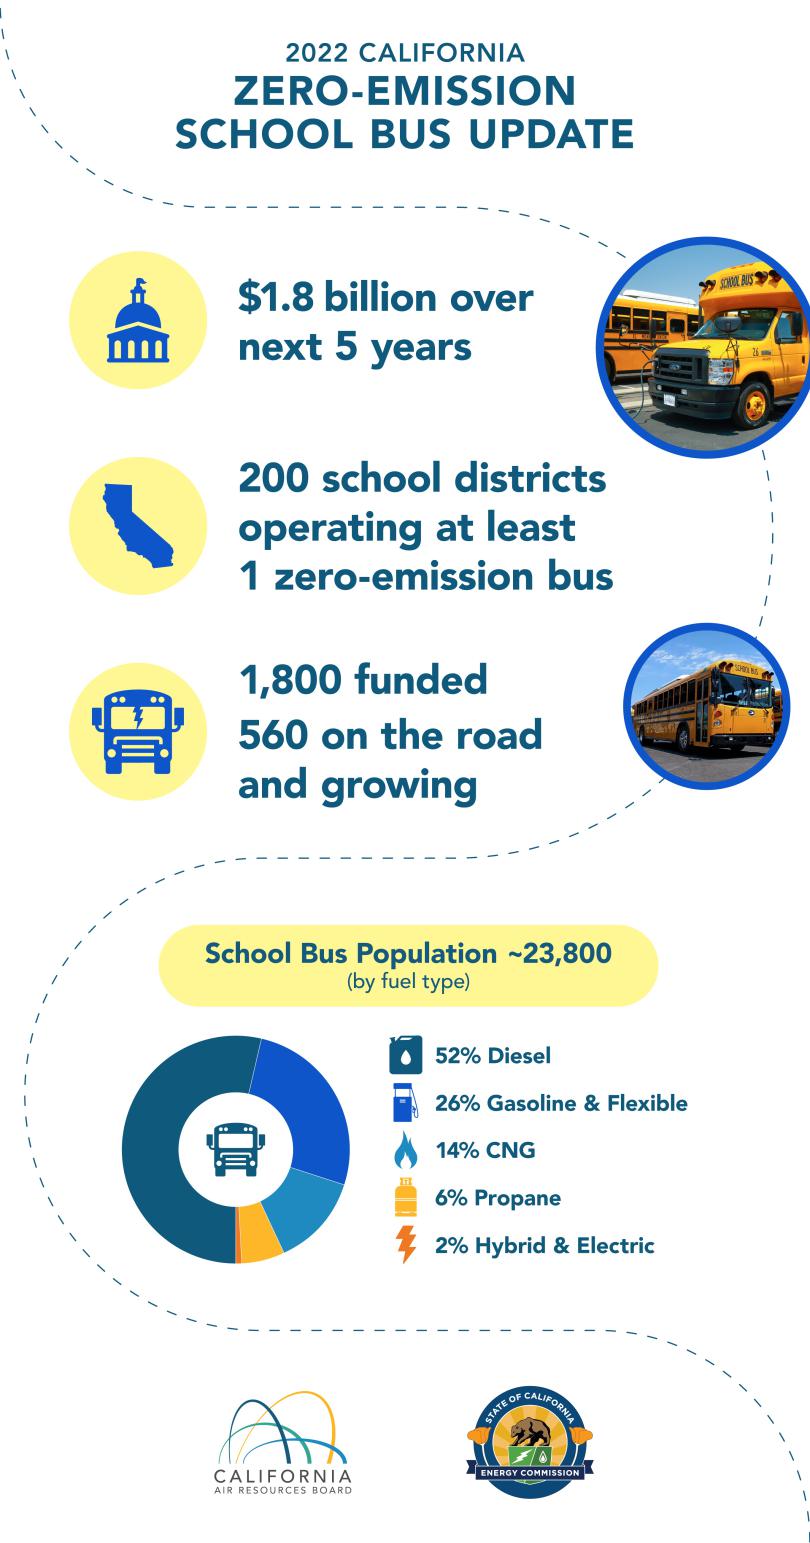 Graphic displaying information on California's 2022 zero-emission school bus update.